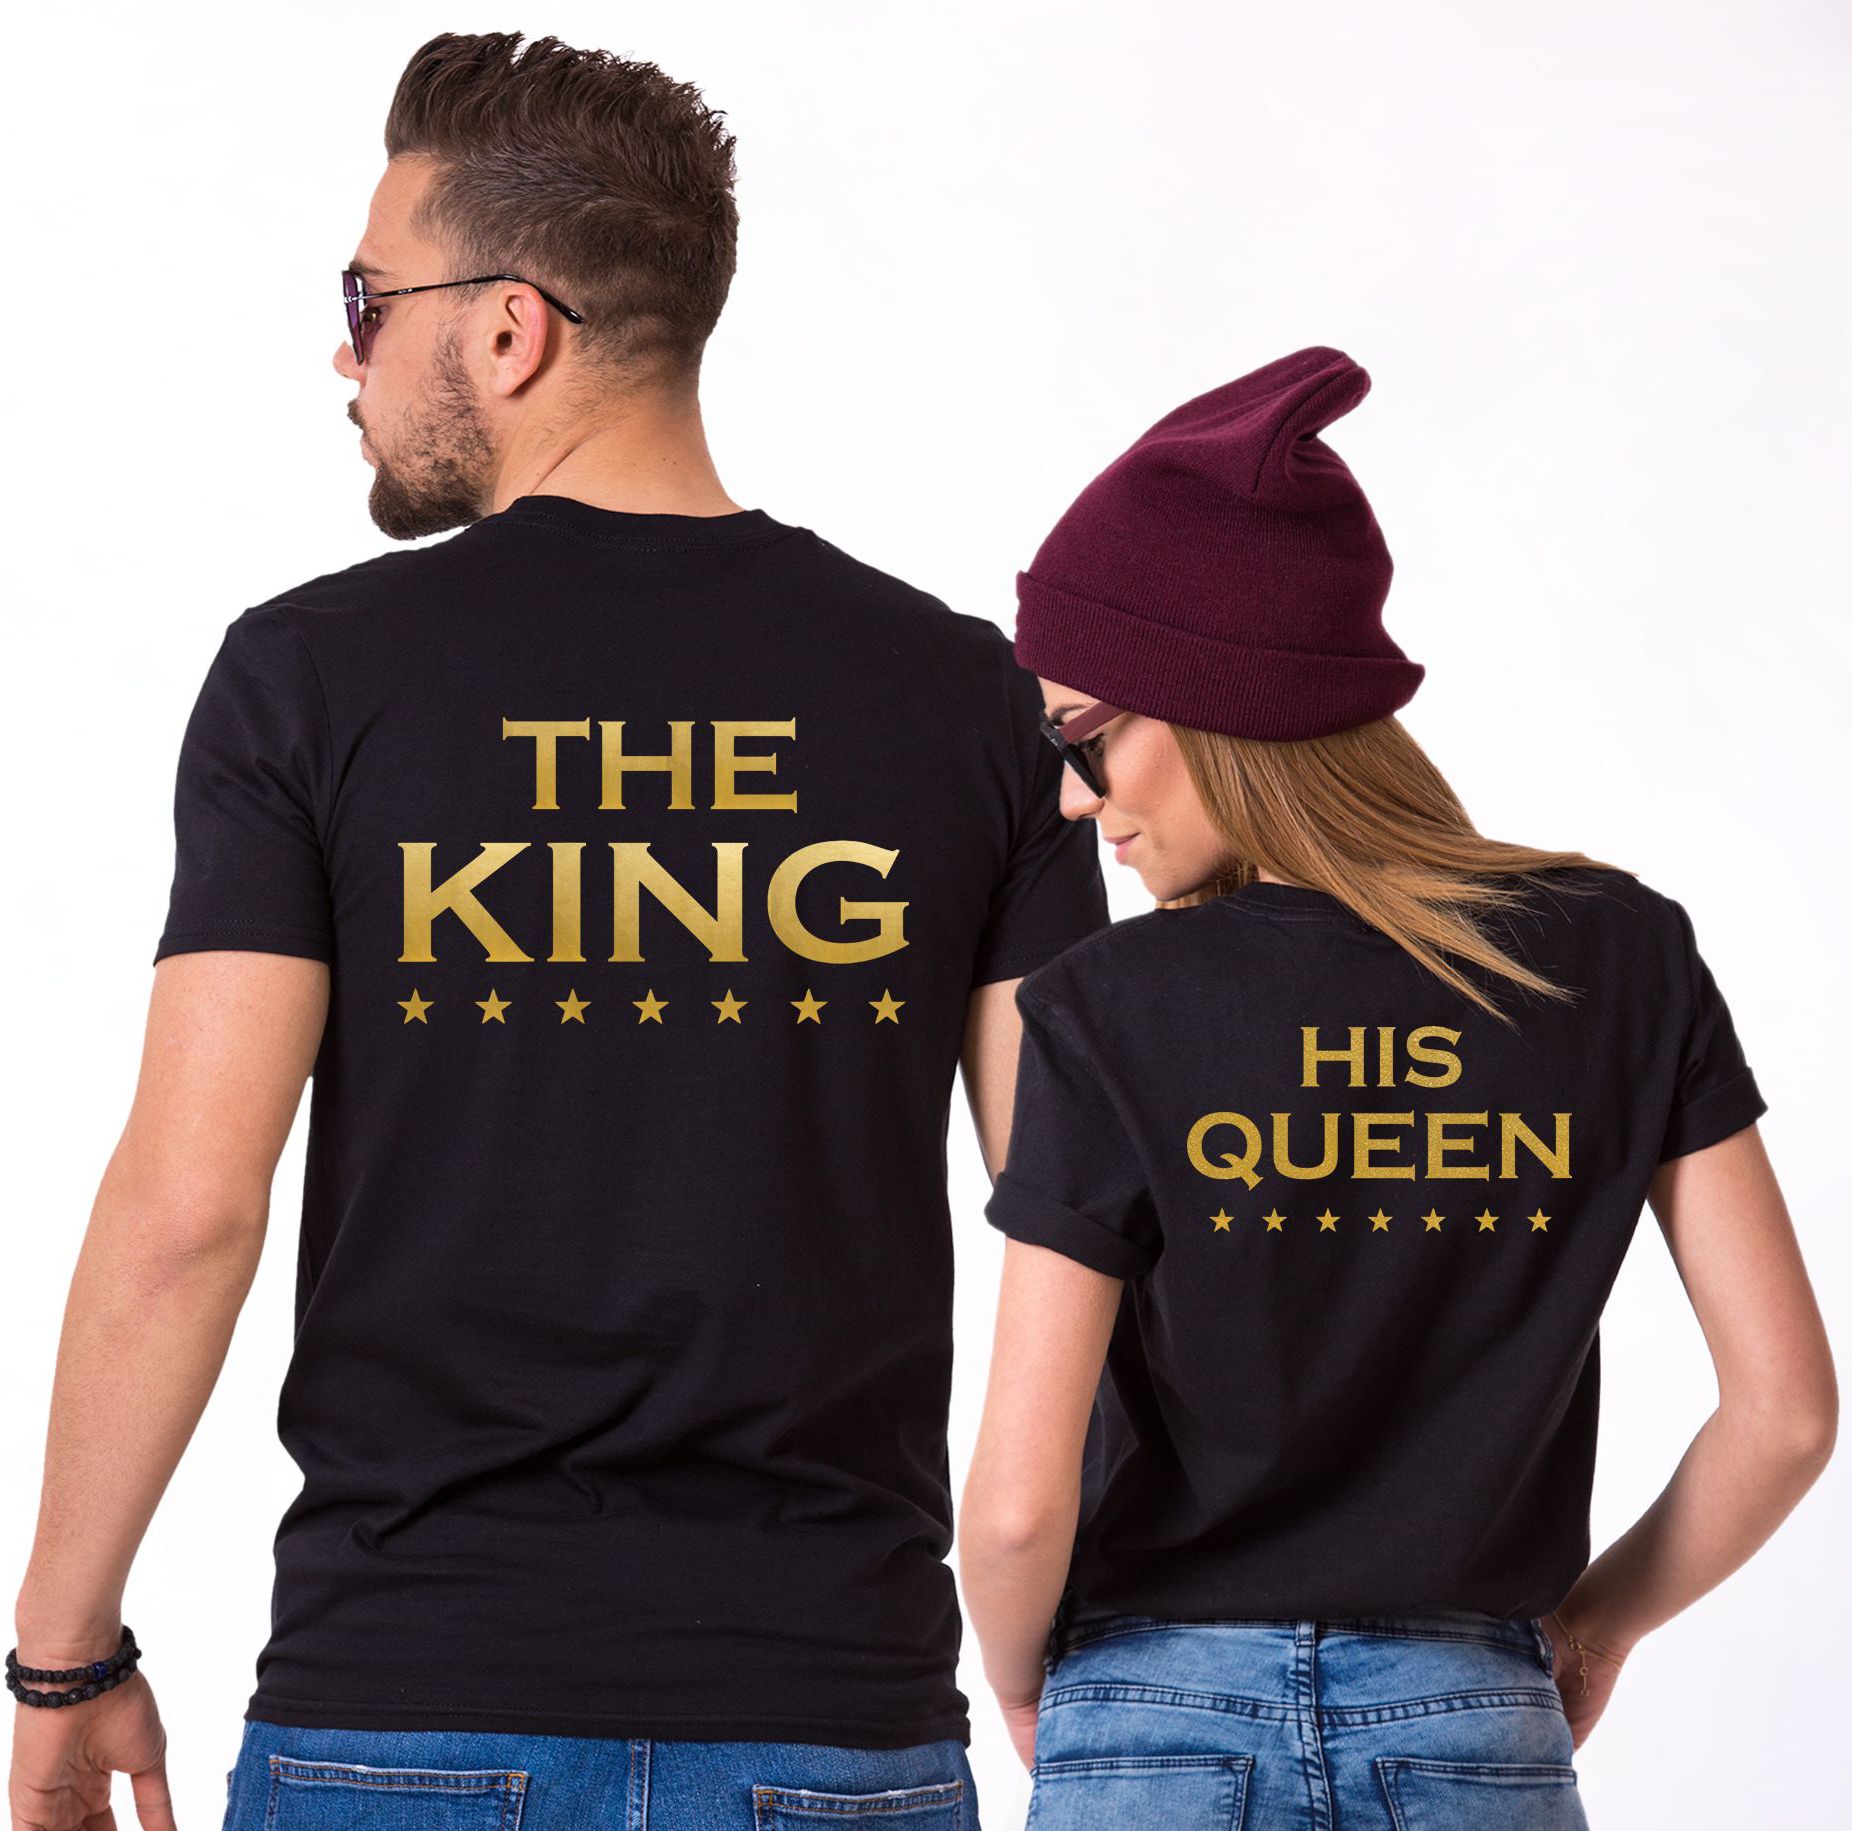 Couple's Prints - Her King. His Queen